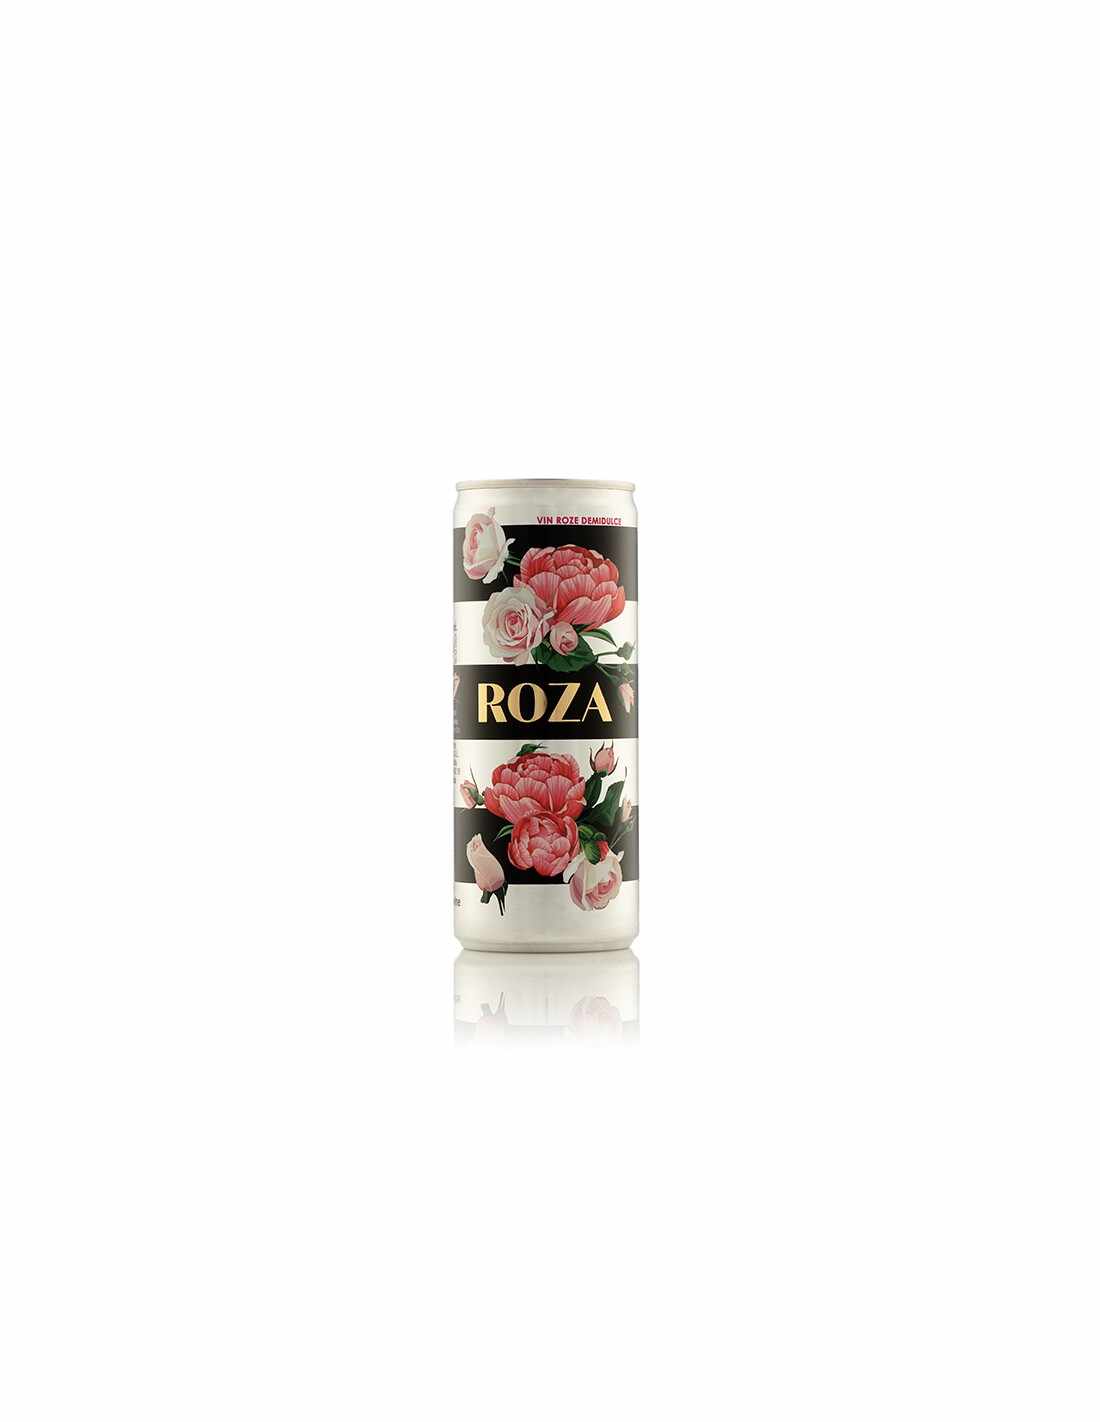 Vin rose demidulce, Feteasca Neagra & Pinot Noir, Roza, Ciumbrud, 12% alc., 0.25L, Romania